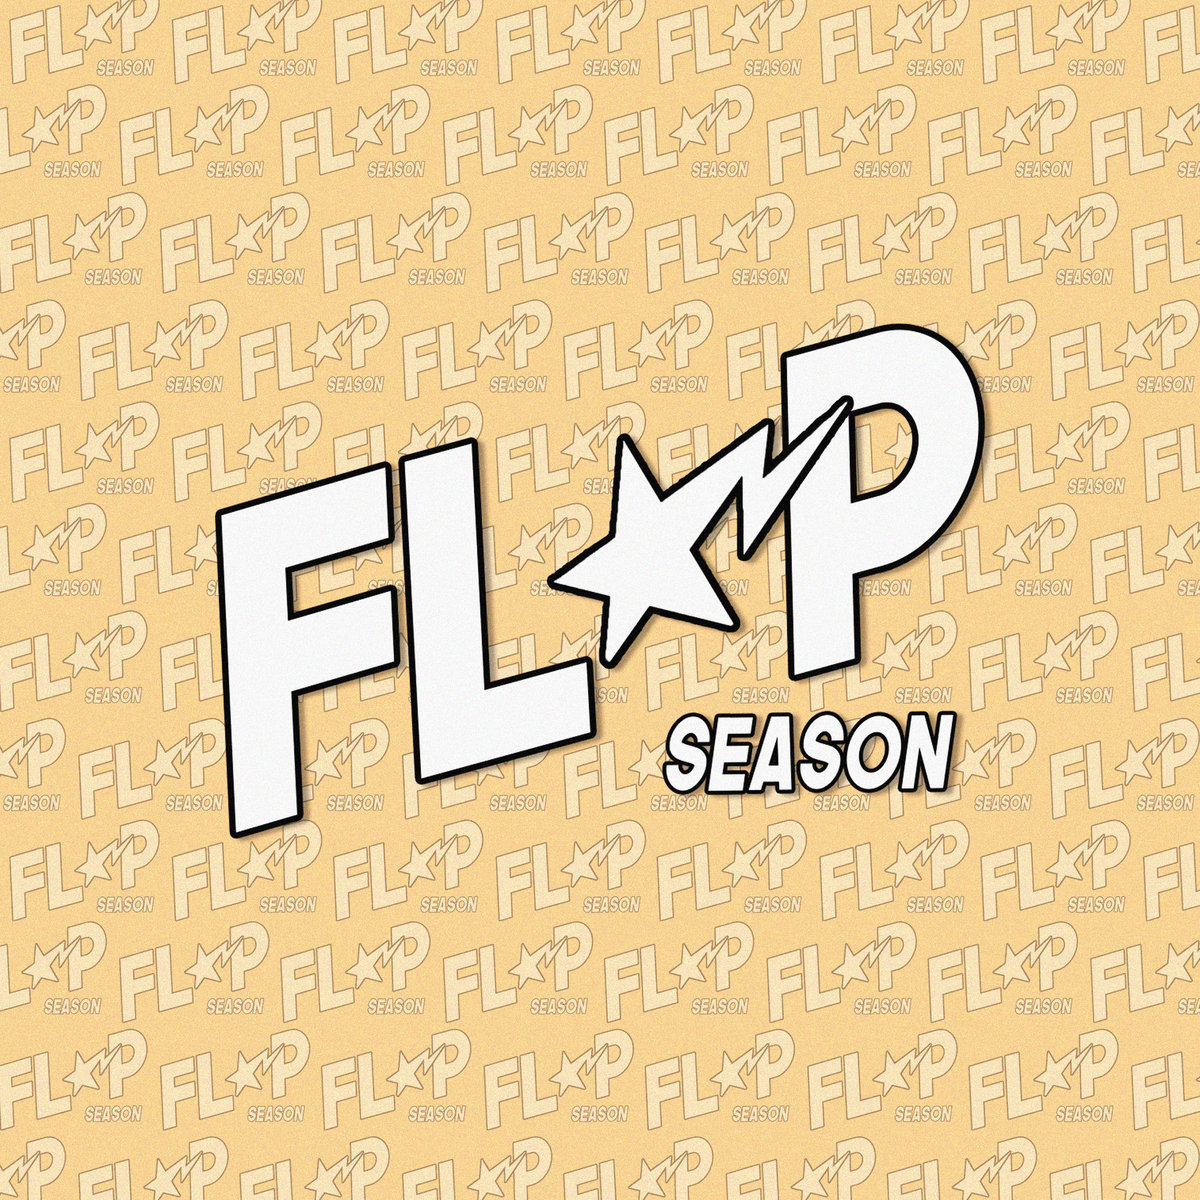 Paul Mond Flip Season Edit PAck